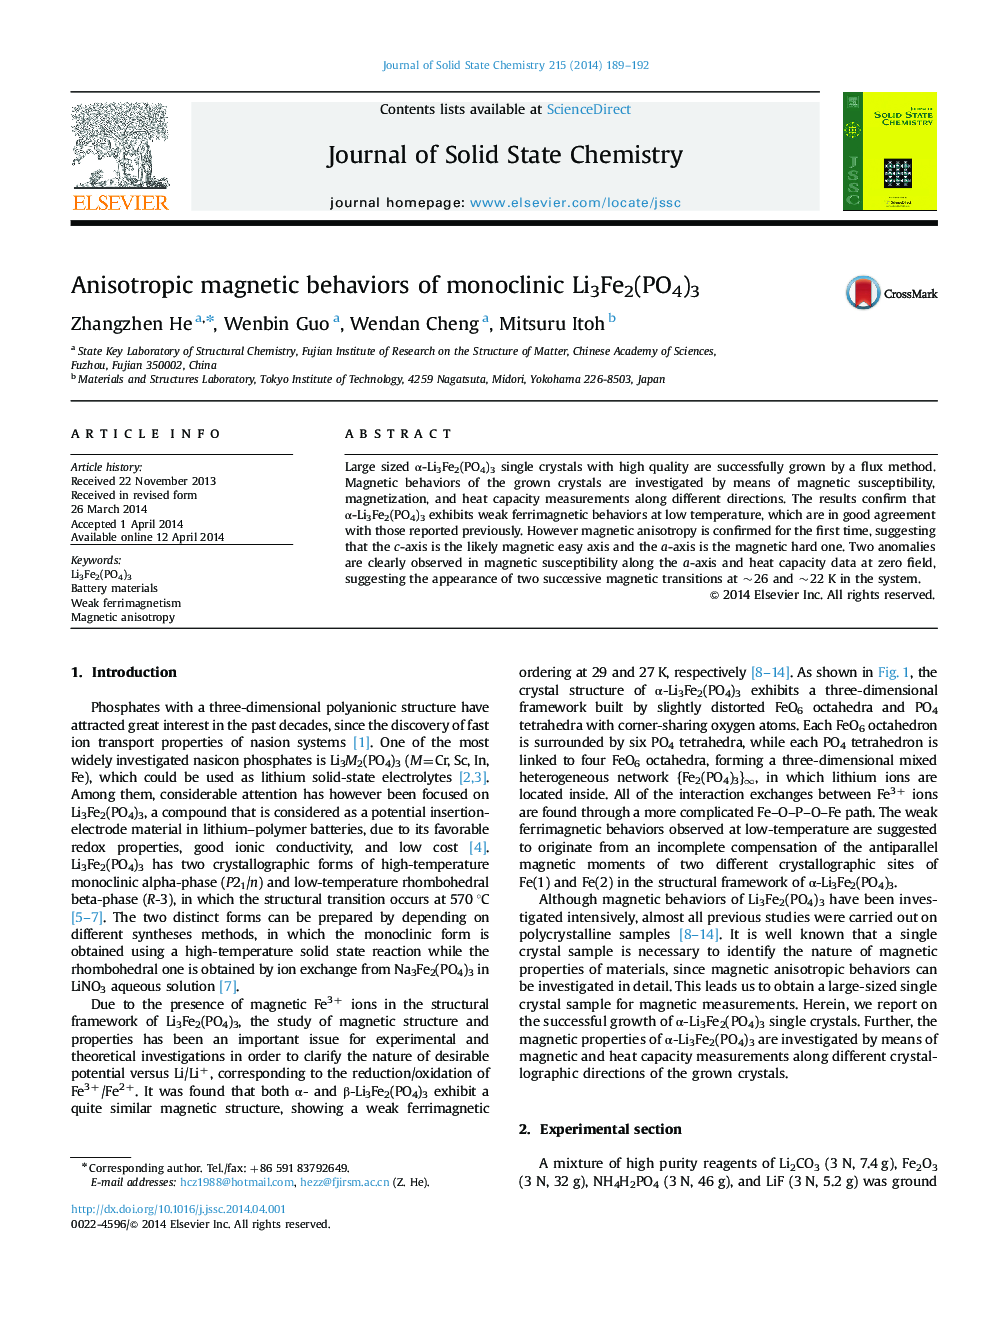 Anisotropic magnetic behaviors of monoclinic Li3Fe2(PO4)3